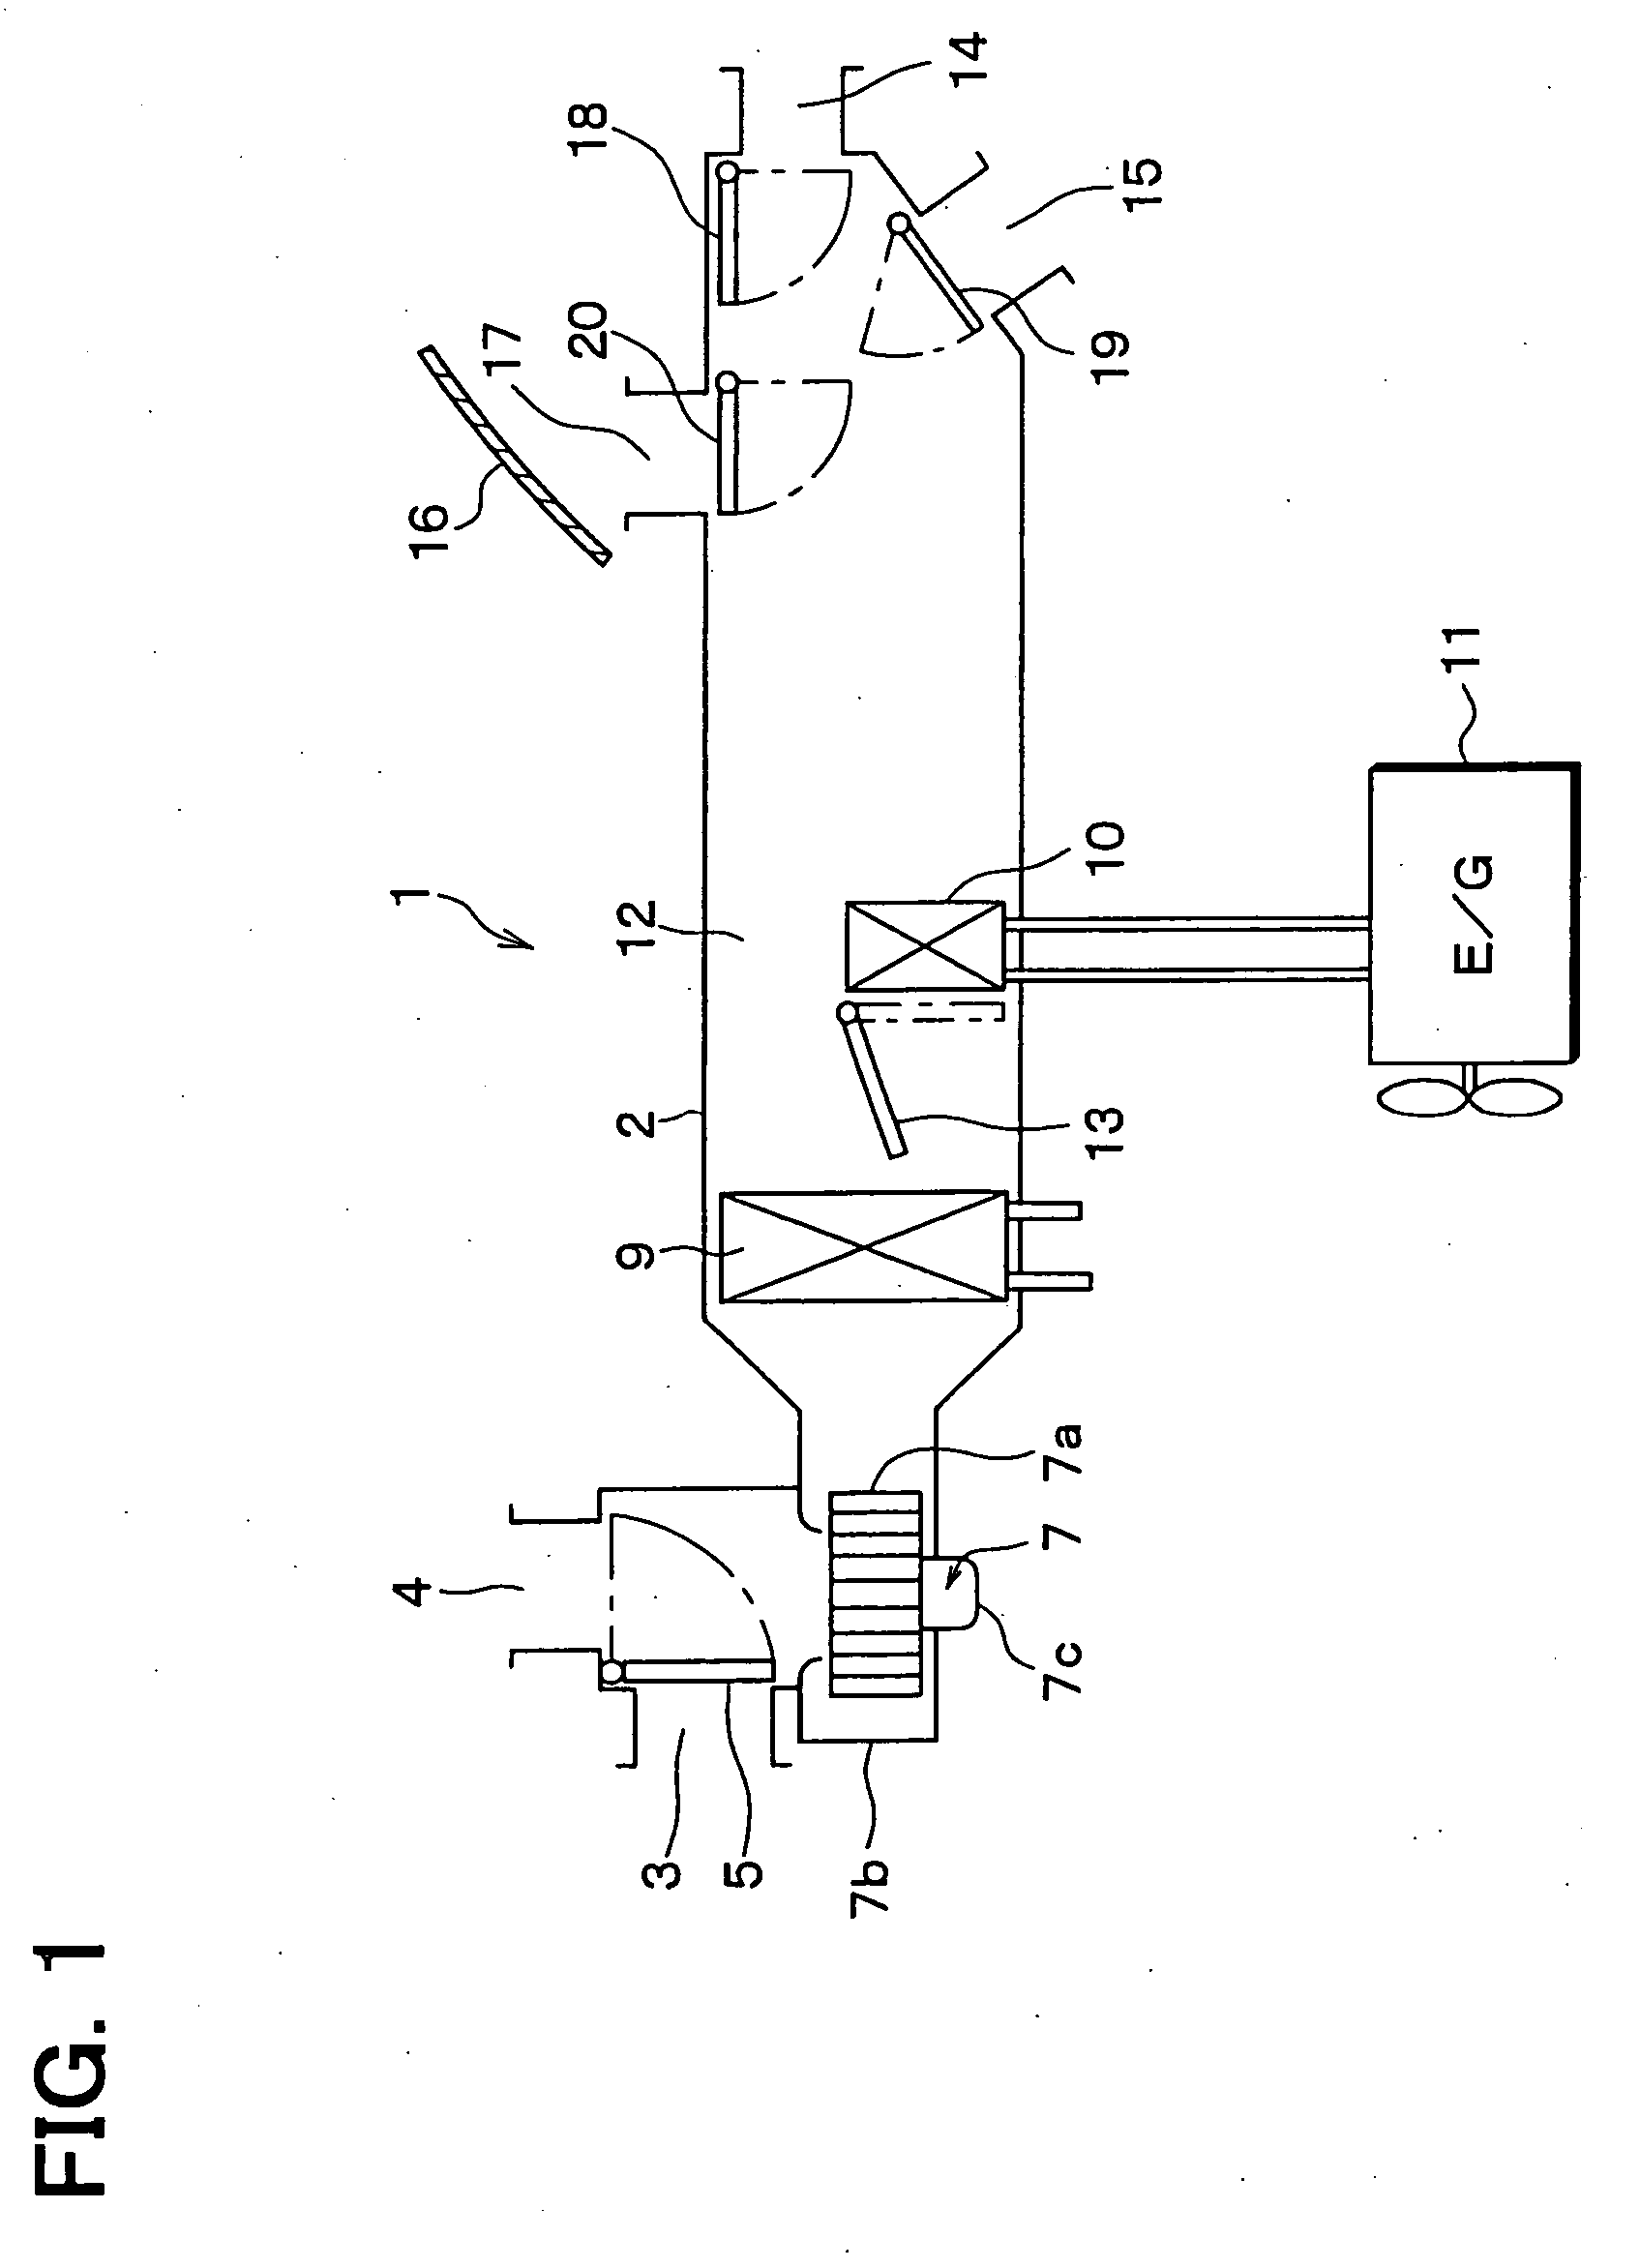 Multi-blade centrifugal blower